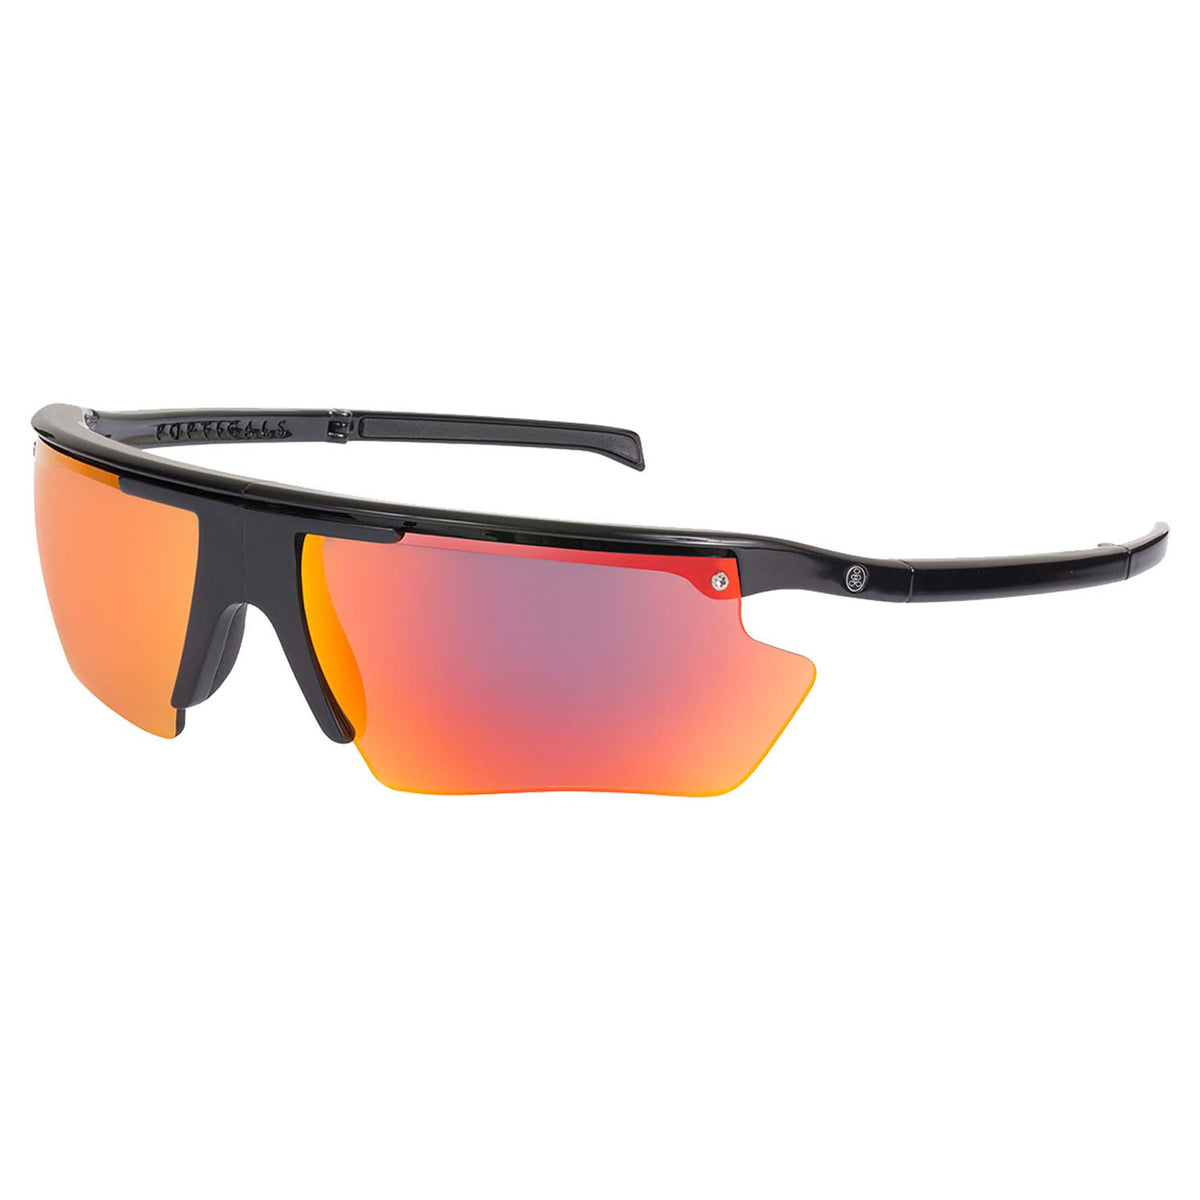 Popticals, Premium Compact Sunglasses, PopEdge, 010091-BGRN, Polarized Sunglasses, Gloss Black Frame, Gray Lenses with Red Mirror Finish, Glam View